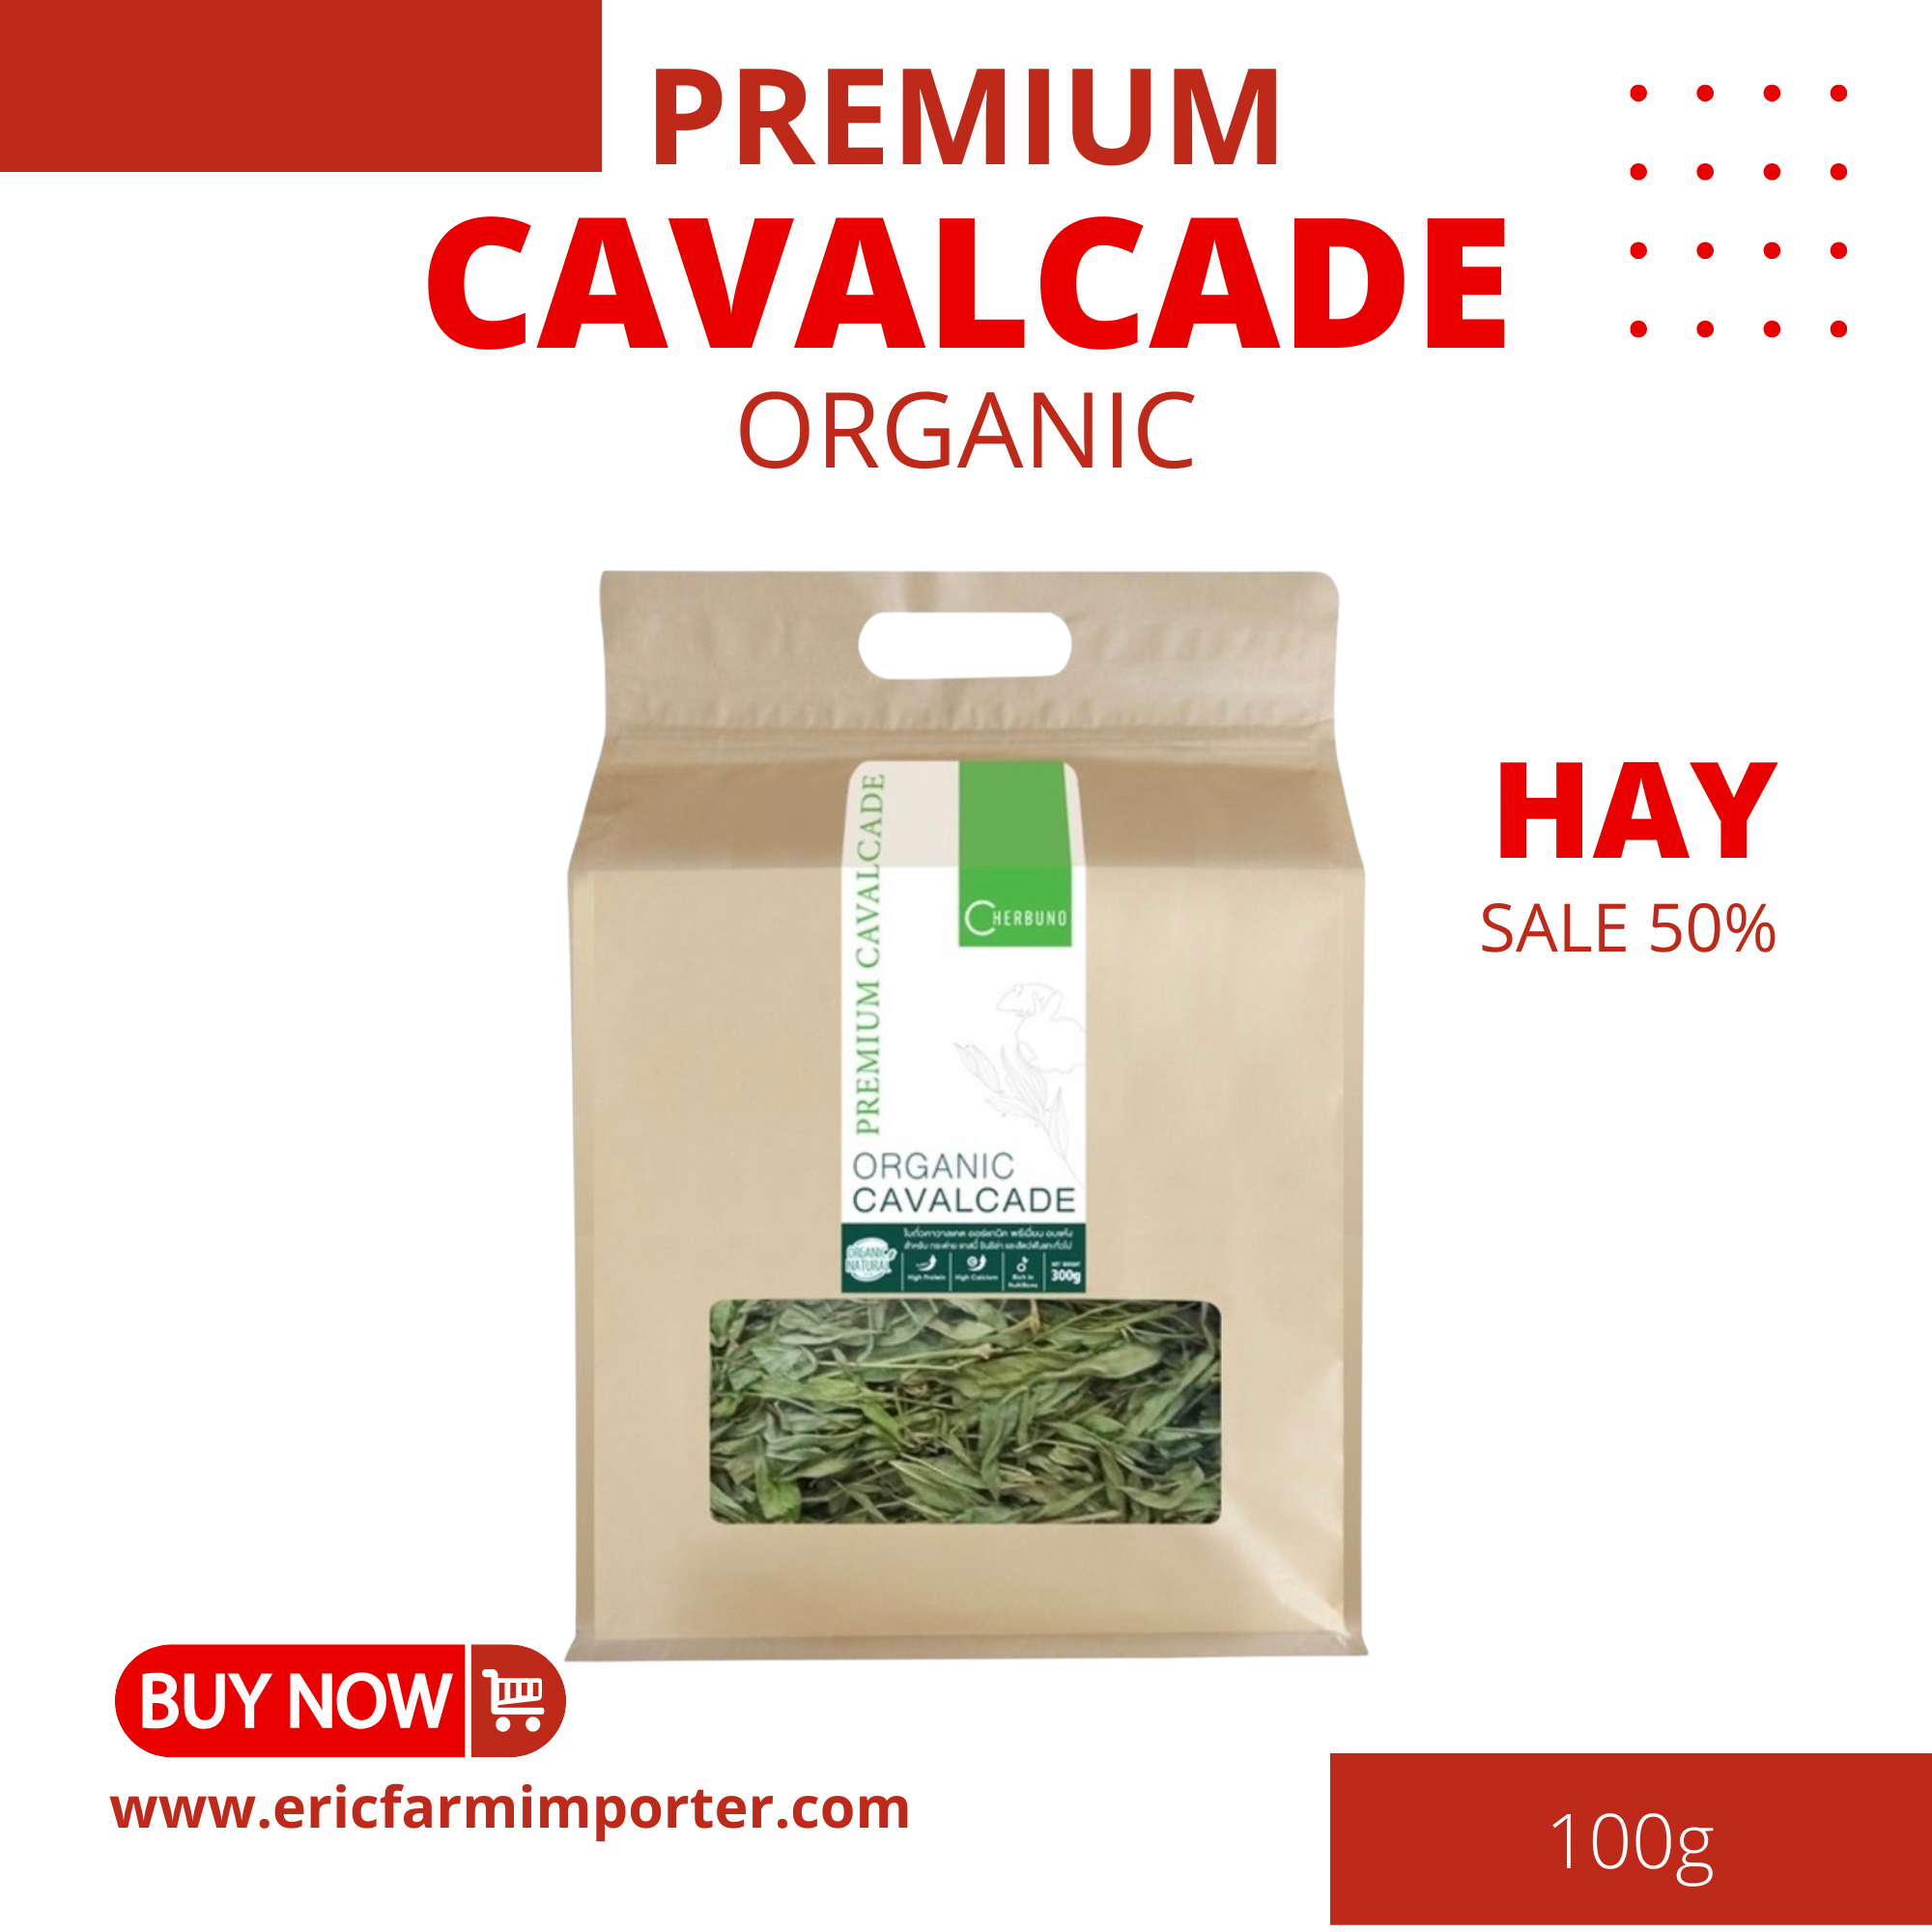 Cỏ Khô Premium Cavalcade Hay Organic  FREE SHIP  Cung cấp protein và canxi cho Guinea Pig, Thỏ, Chinchilla, ...